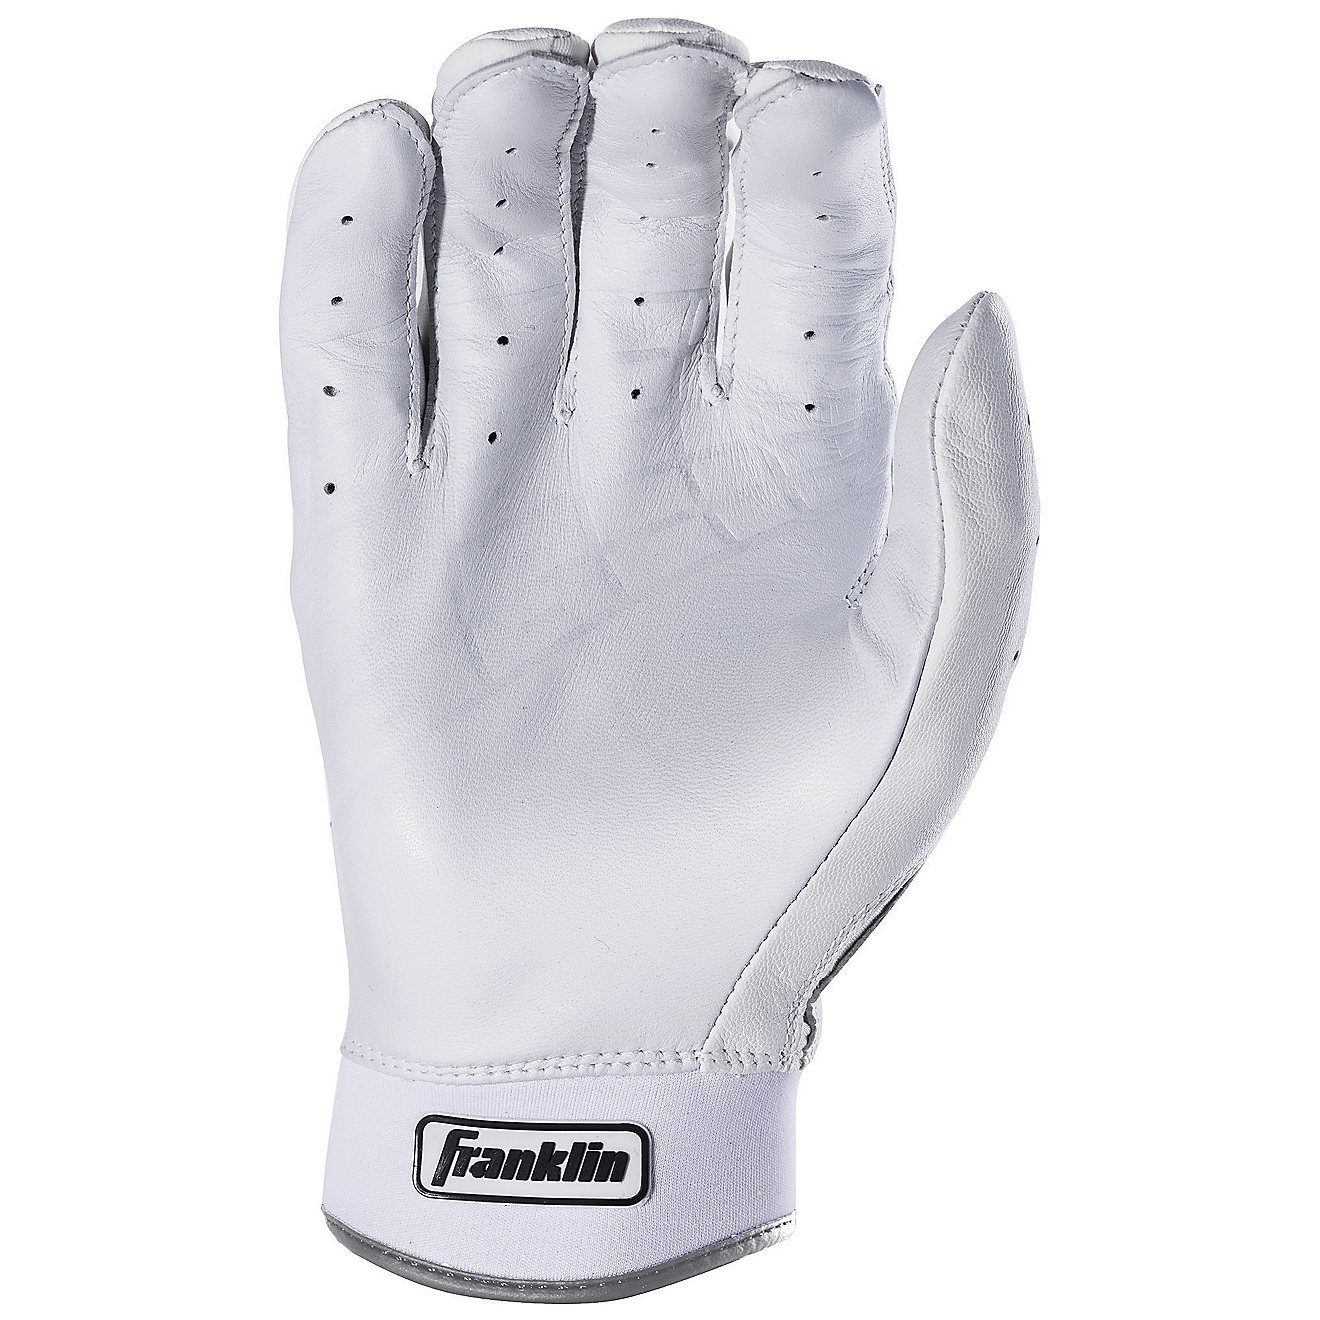 NEW Men's Franklin Powerstrap Adult Batting Gloves Black White Size XL 